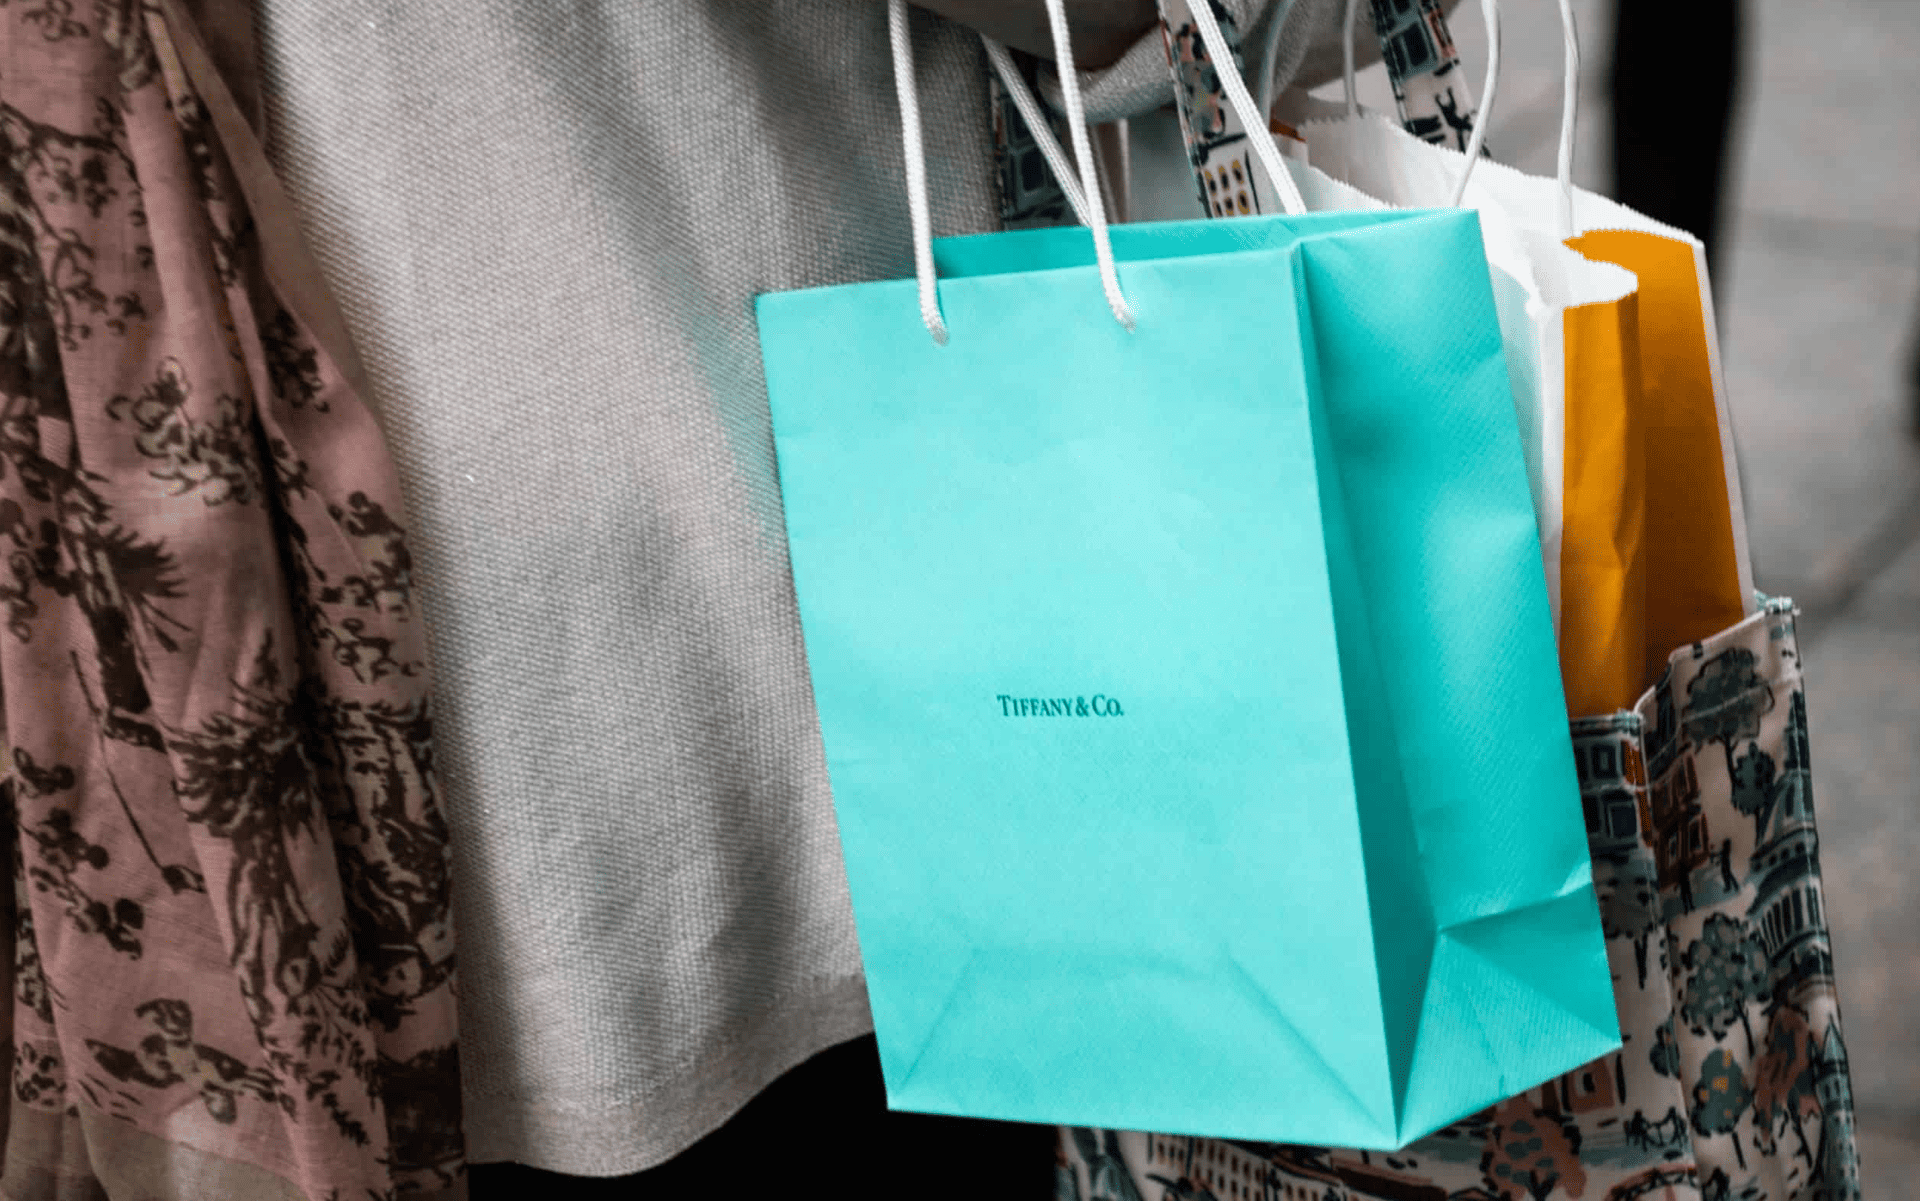 Tiffany & Co branded bag